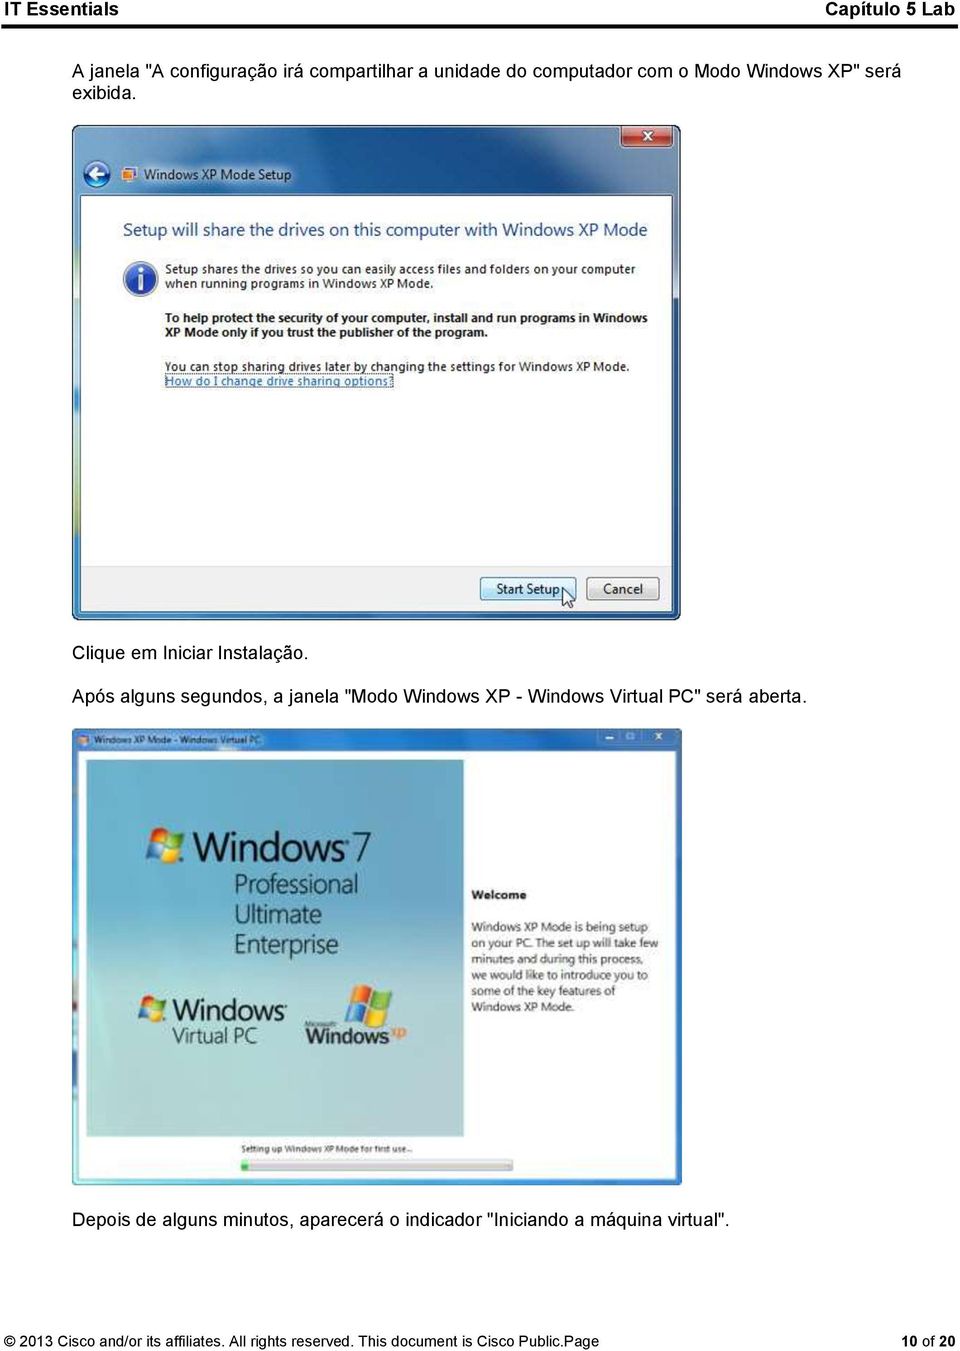 Após alguns segundos, a janela "Modo Windows XP - Windows Virtual PC" será aberta.